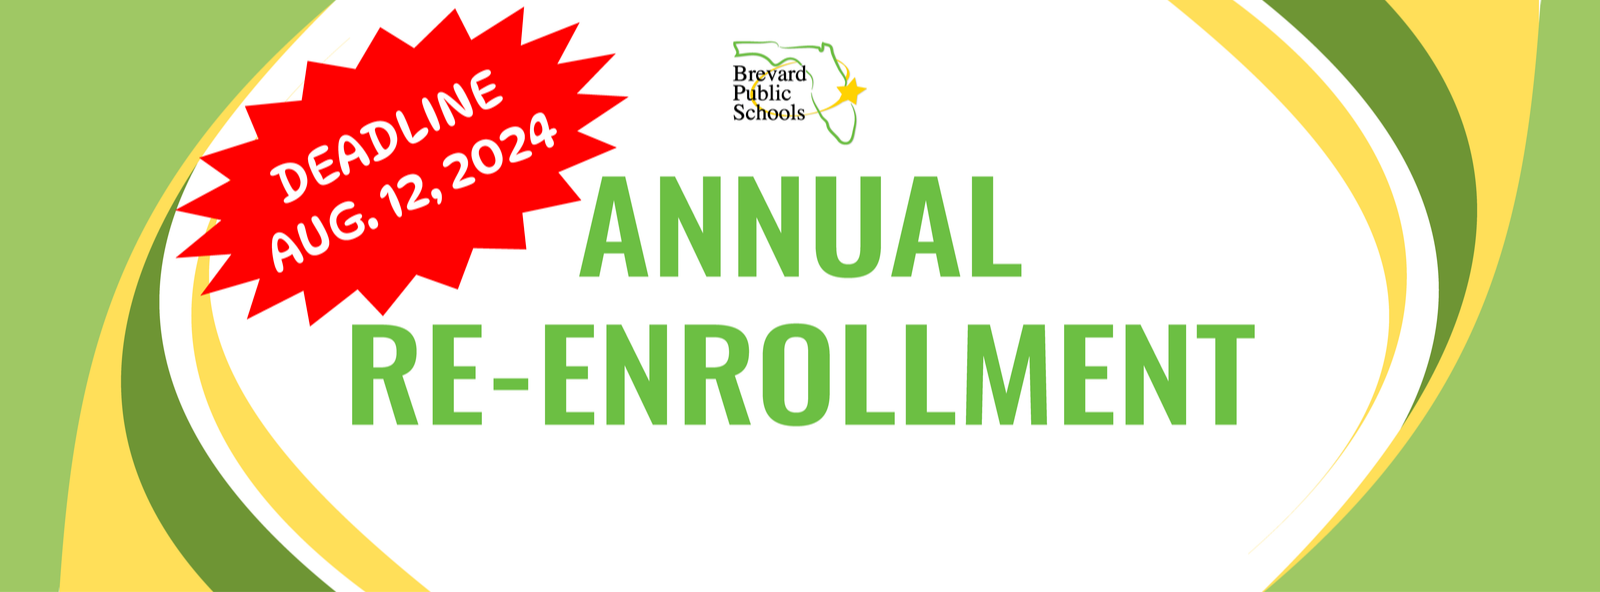 Annual Re-enrollment now open Deadline Aug. 12, 2024